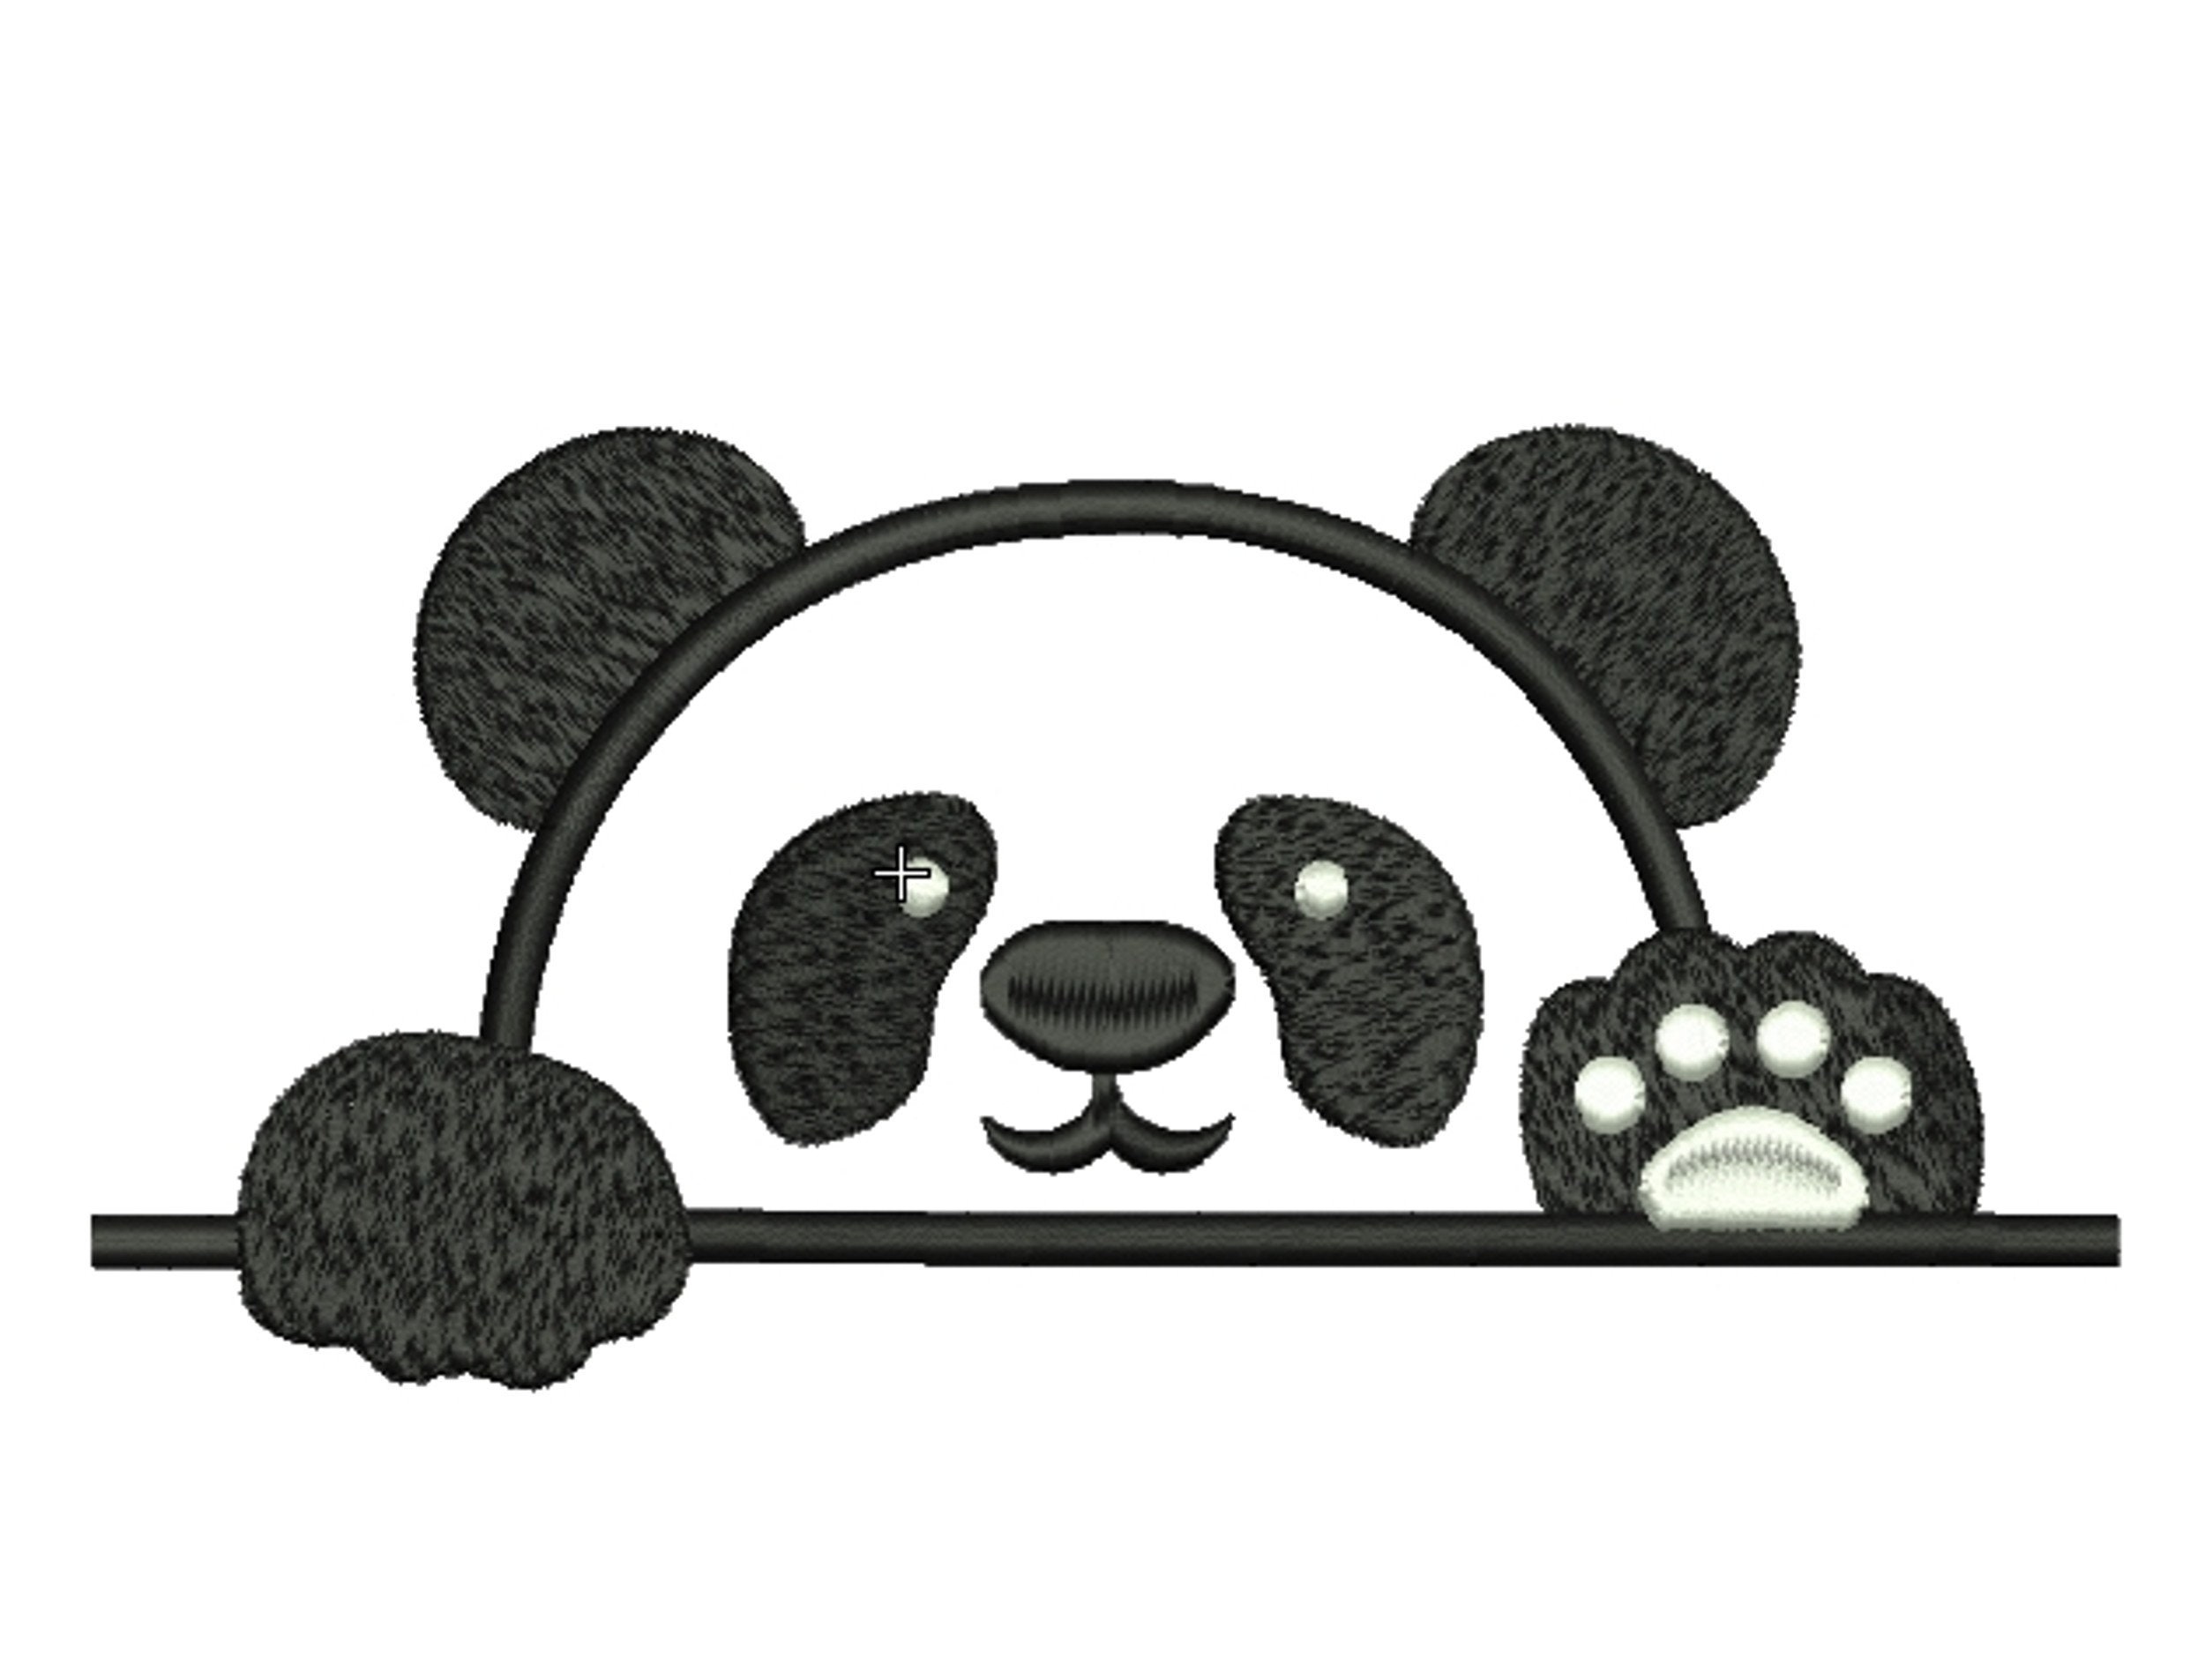 Panda Applique with Short Fur / Plush Doll Applique / Fabric Animal Pa, MiniatureSweet, Kawaii Resin Crafts, Decoden Cabochons Supplies